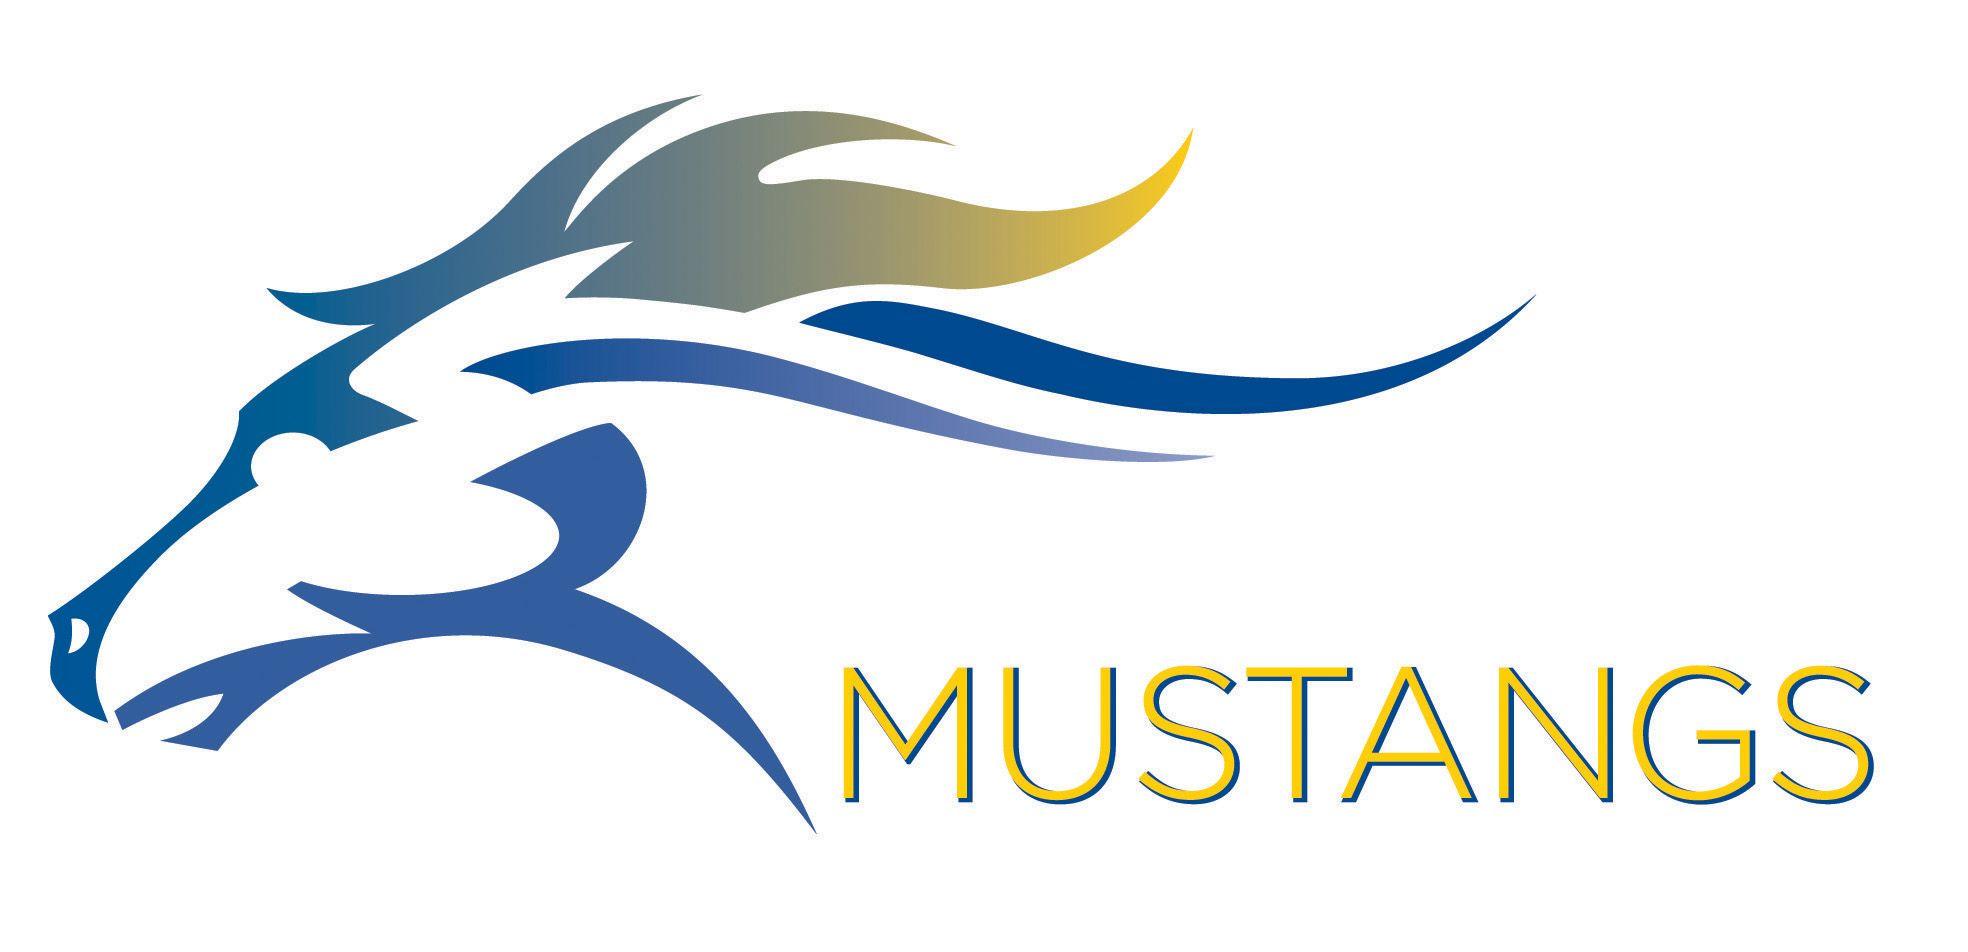 Mustang Mascot Logo - Free Mustang Mascot Logo, Download Free Clip Art, Free Clip Art